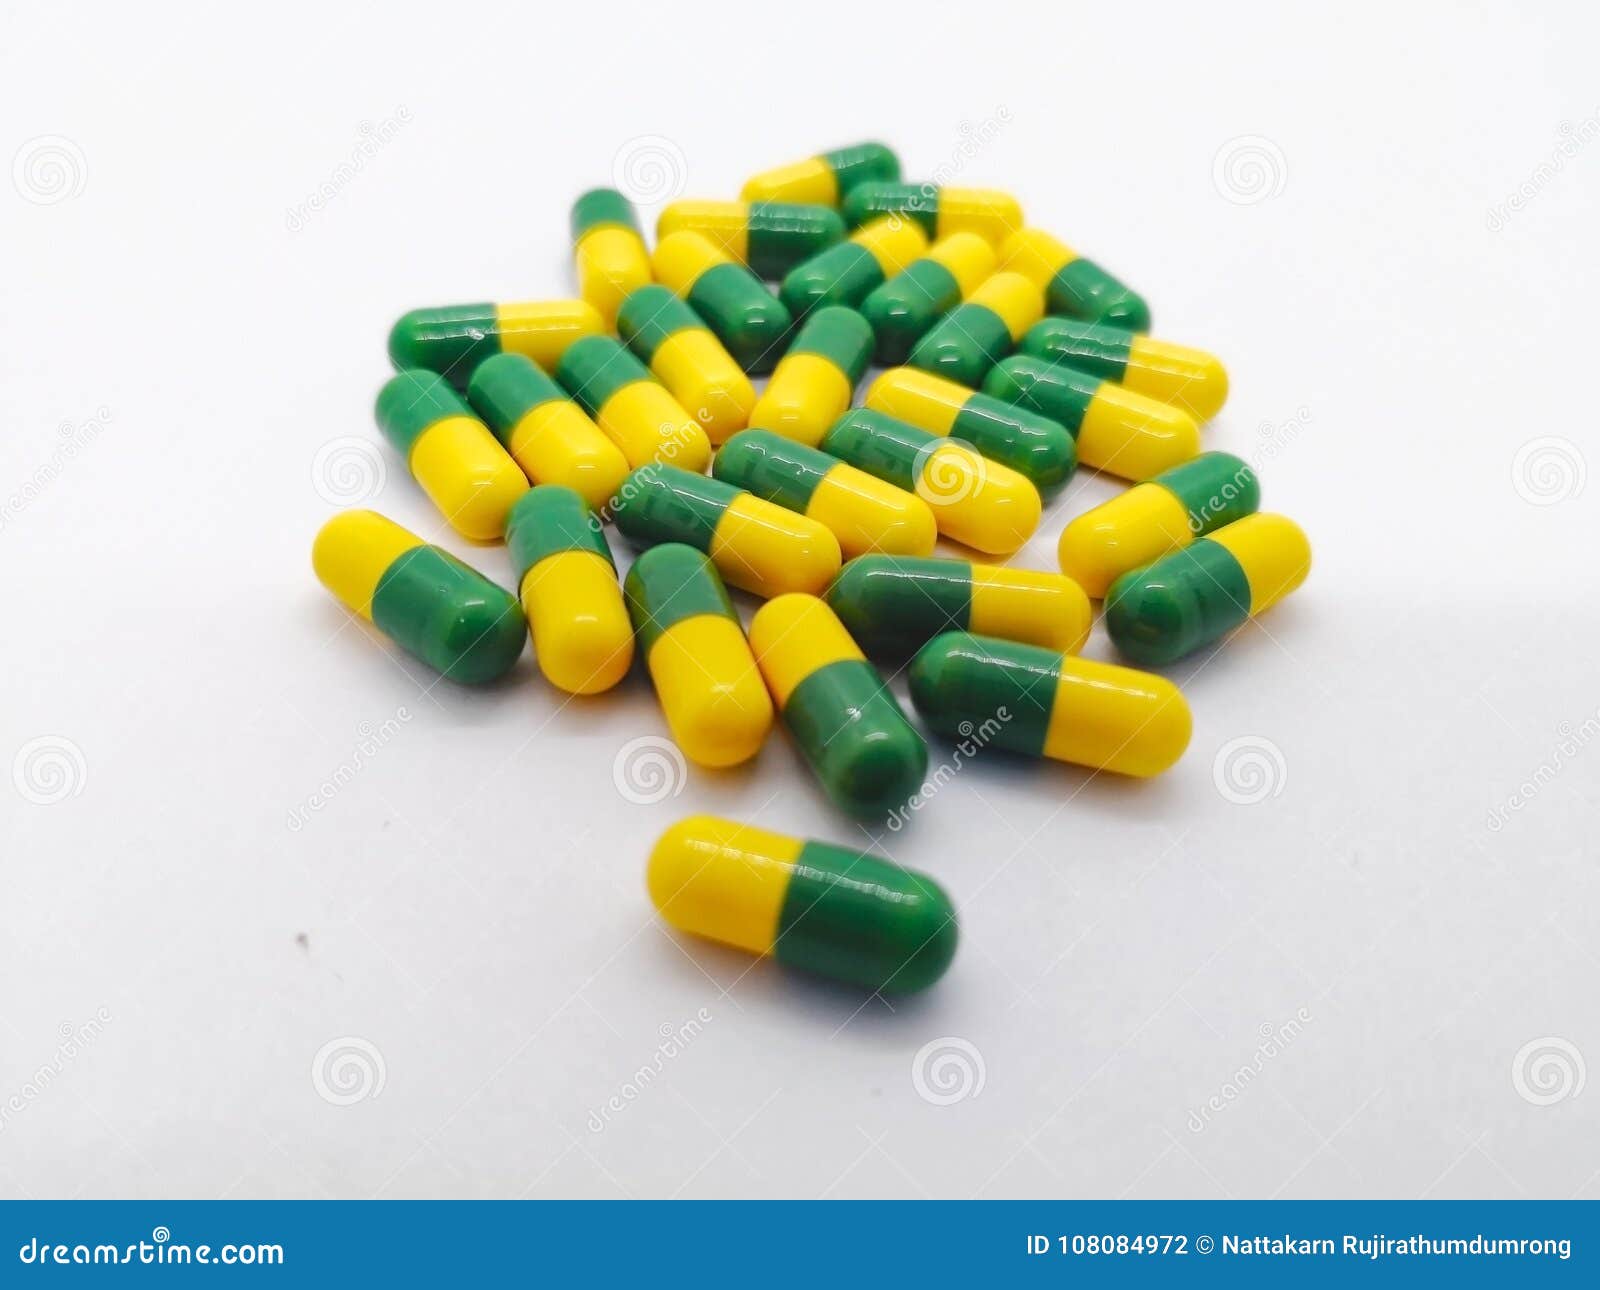 generic medication tramadol